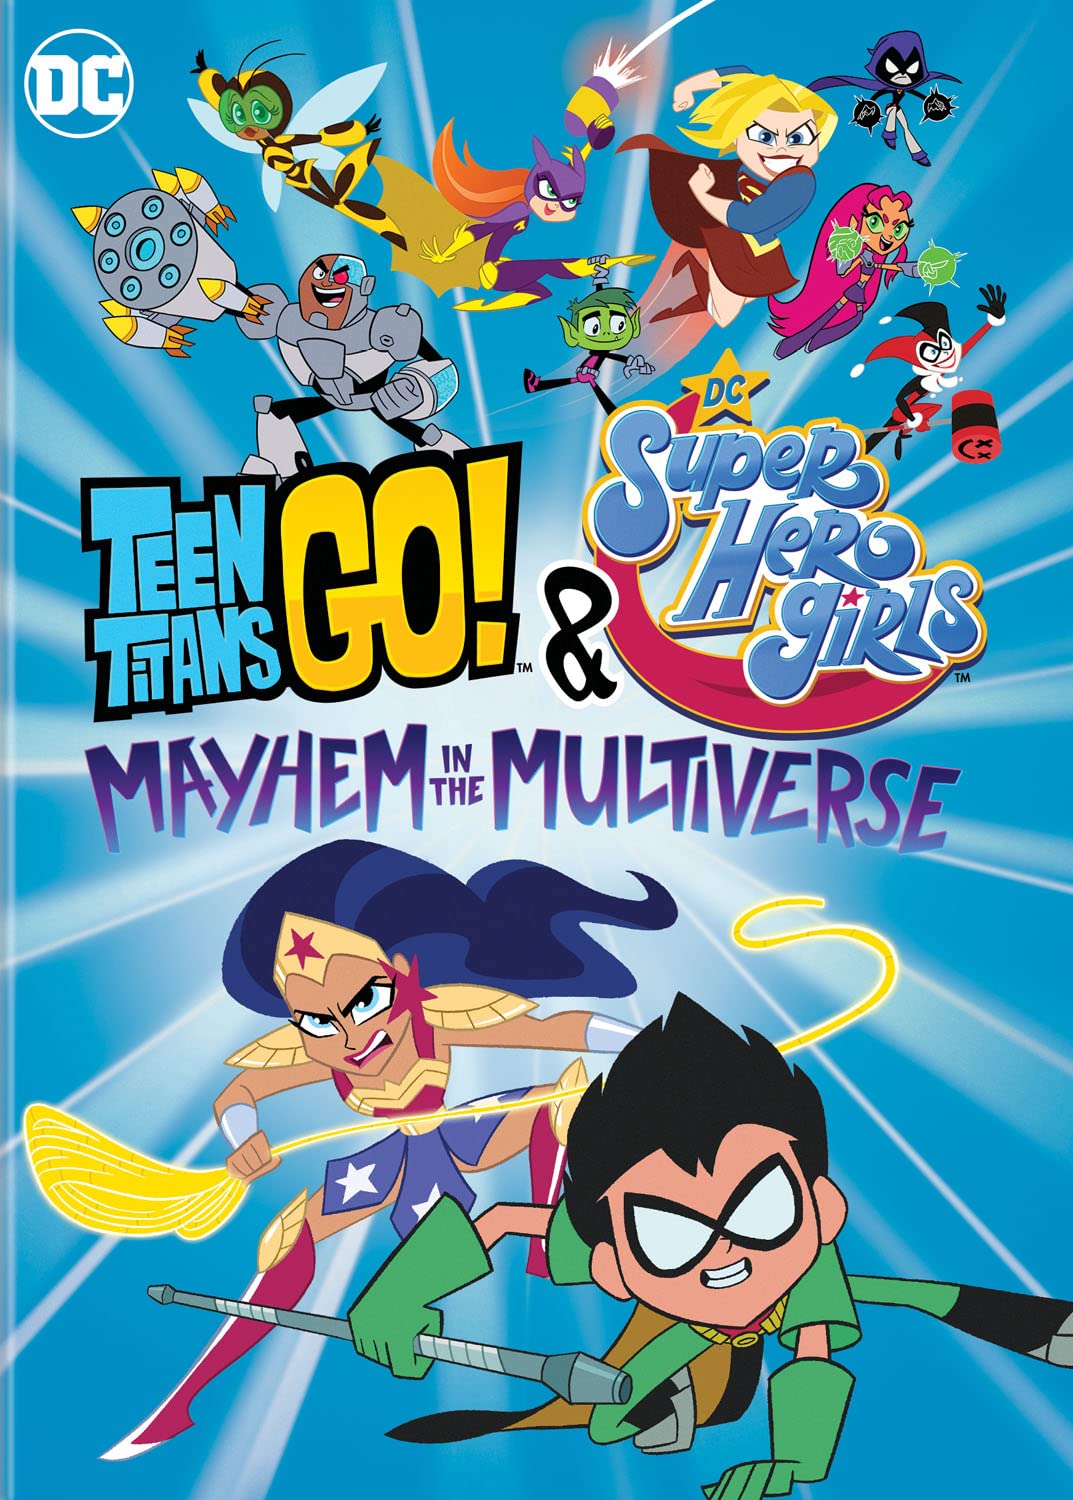 Teen Titans Go! & DC Super Hero Girls: Mayhem In The Multiverse - DVD [ 2022 ]  - Animation Movies On DVD - Movies On GRUV